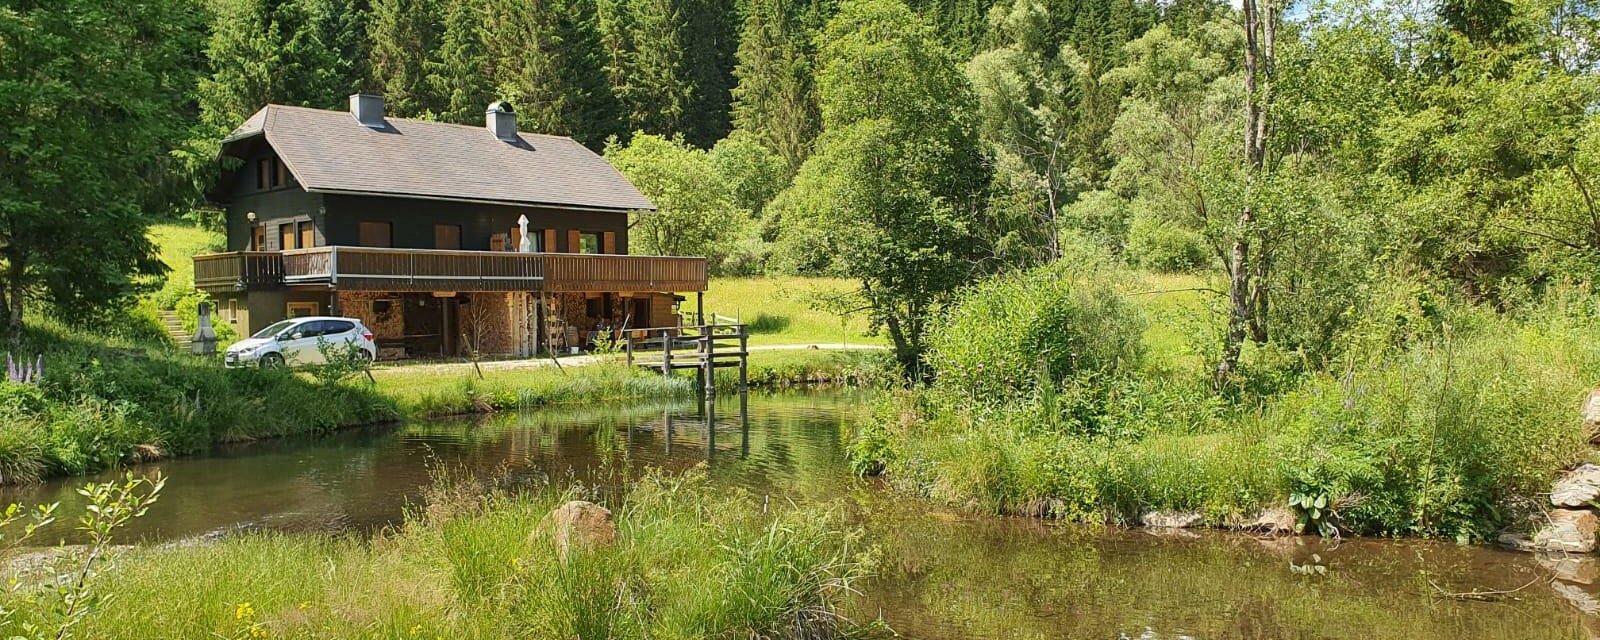 Fischerhütte Scharzenberger